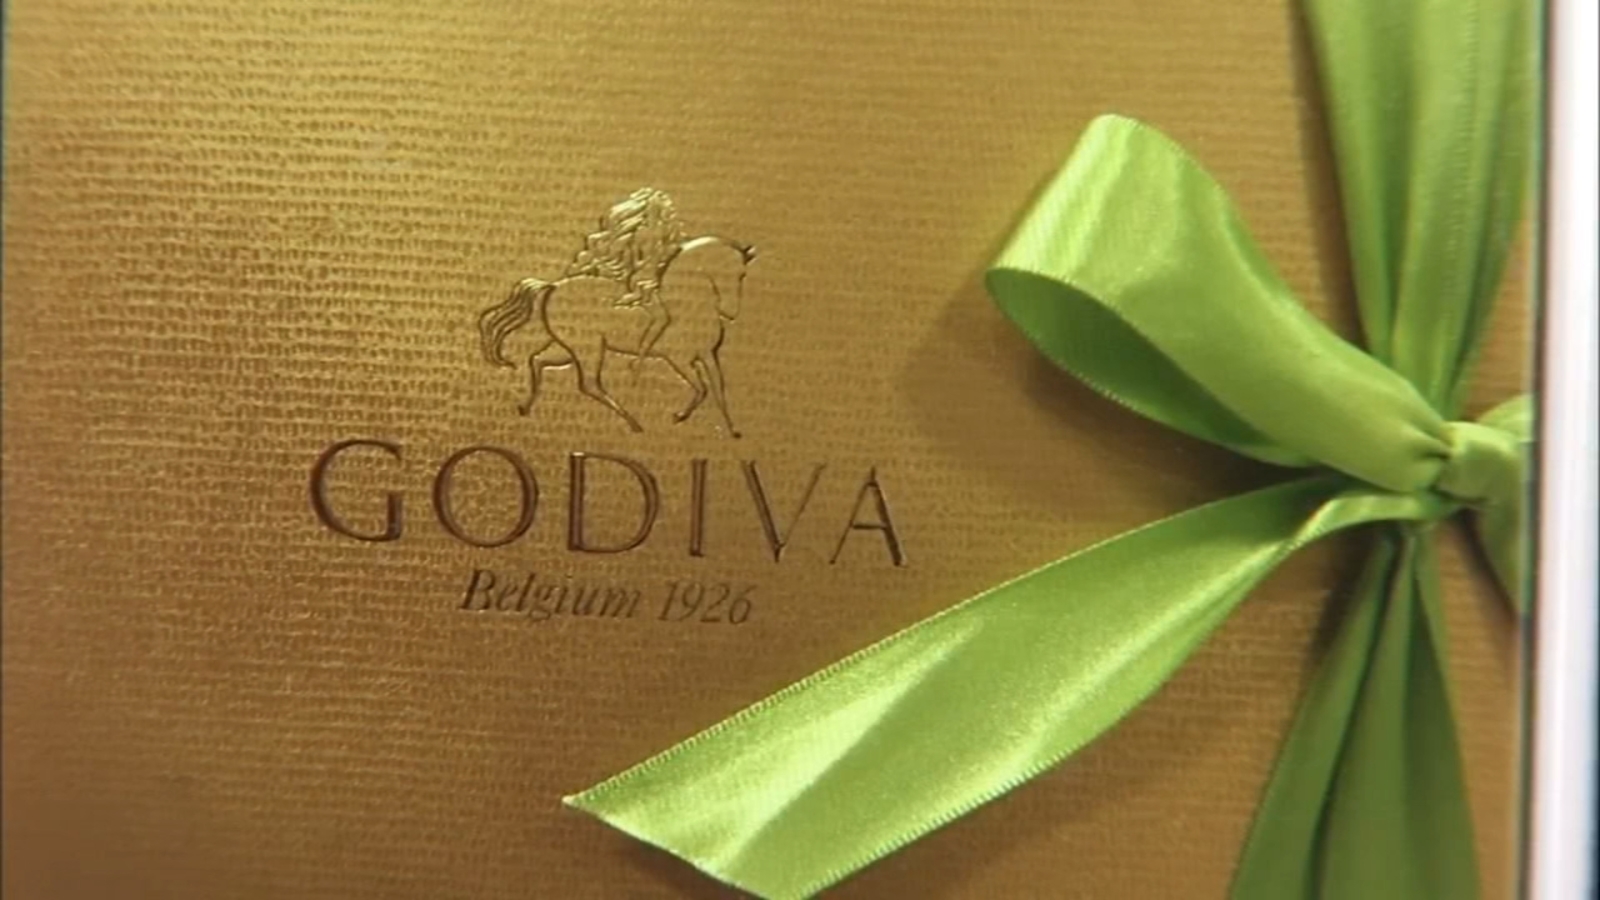 Godiva Chocolatier Wallpapers